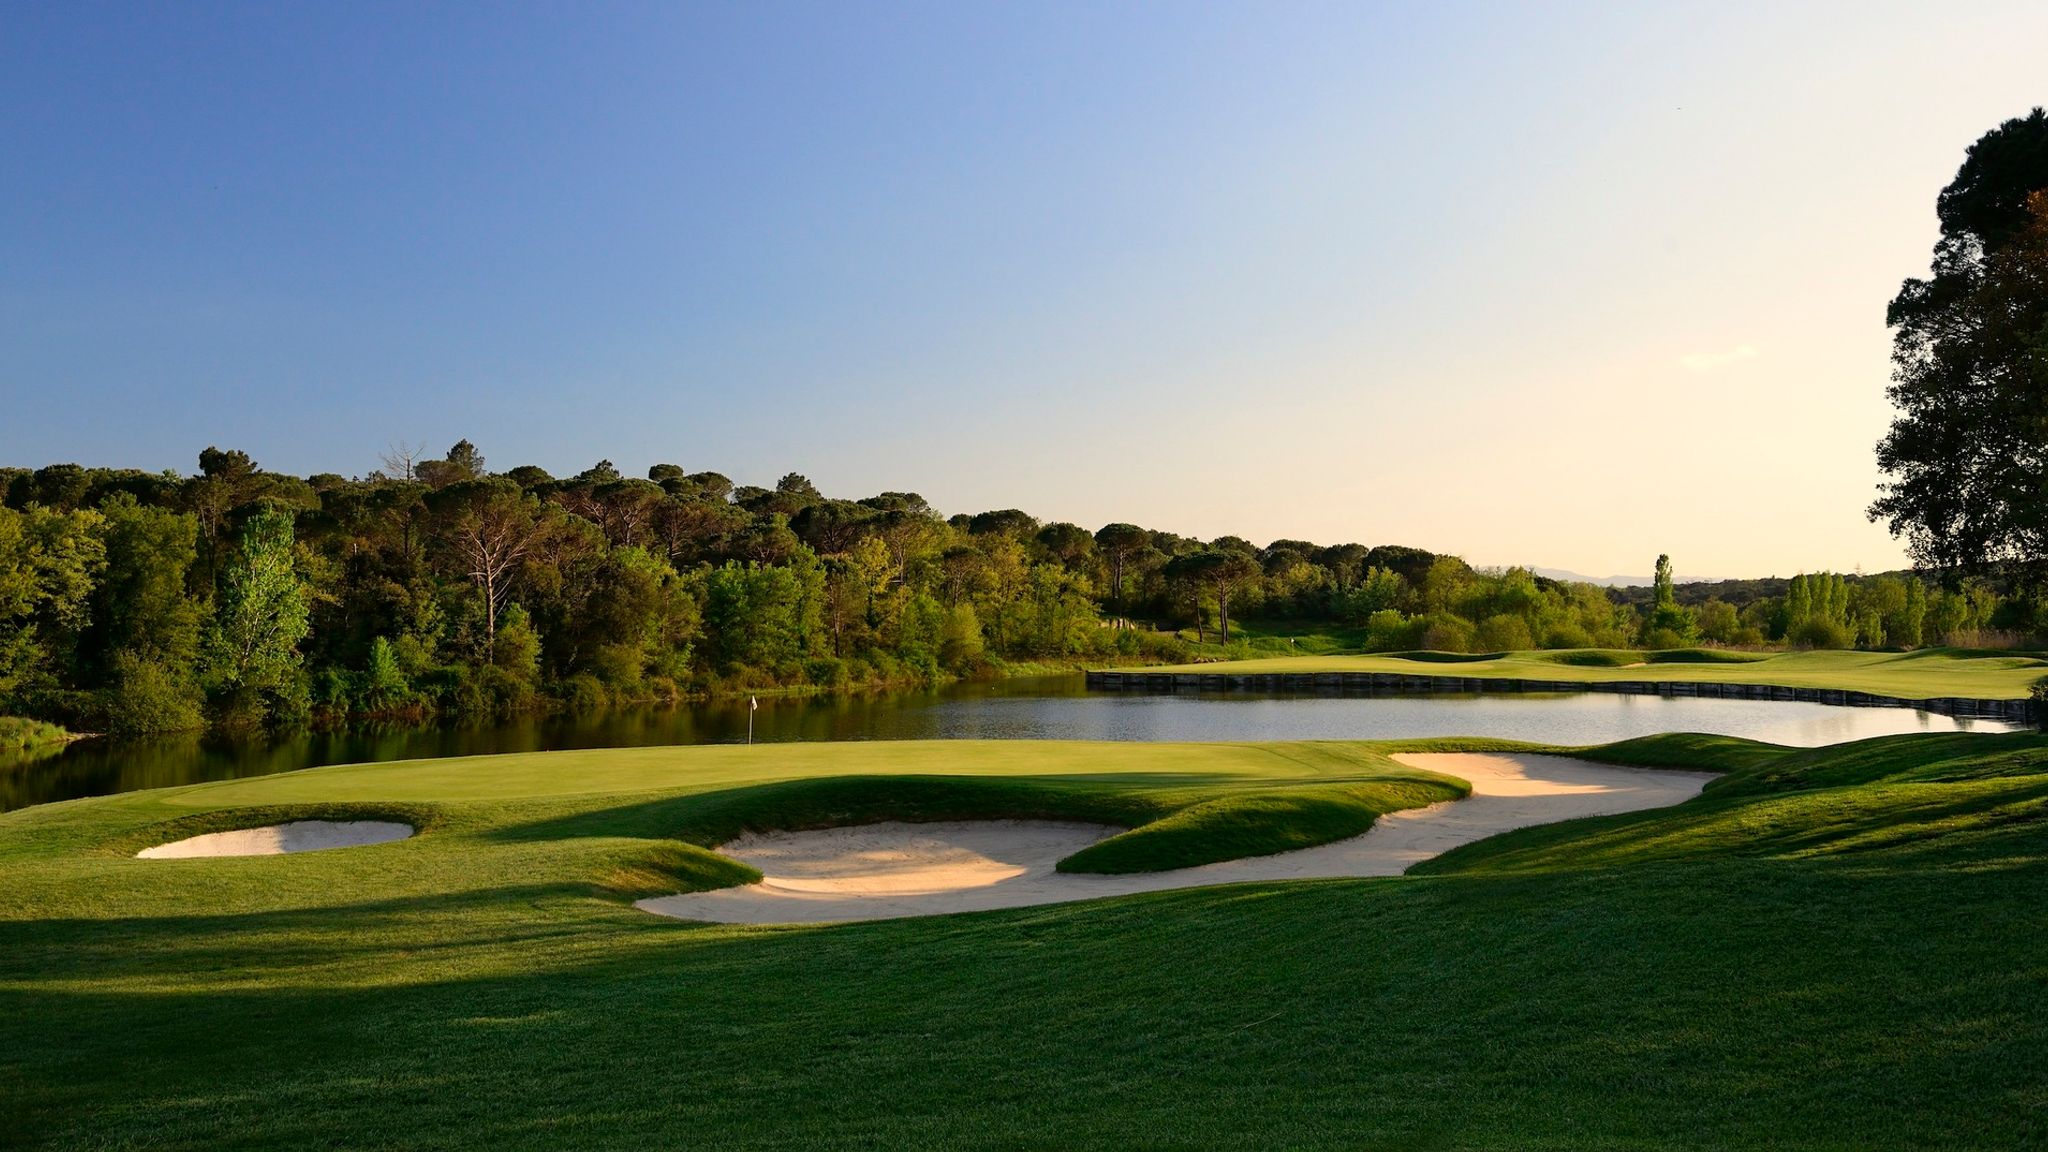 European Tour: PGA Catalunya Resort will host the Open de Espana in May | Golf News Sky Sports